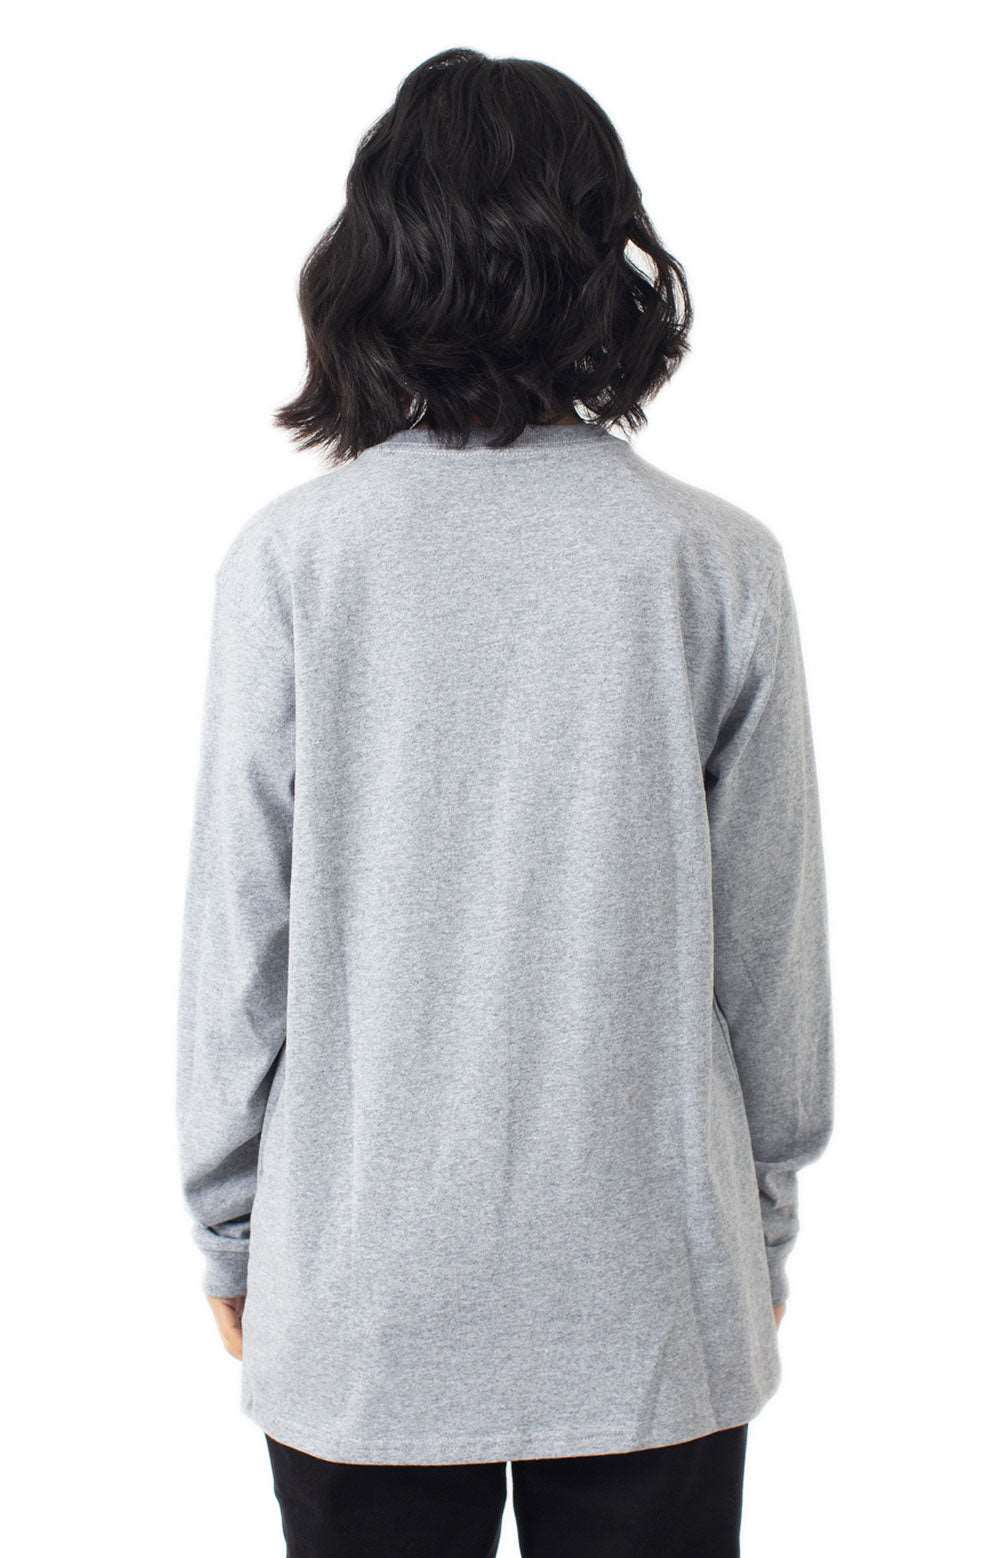 (103401) WK231 Workwear Sleeve Logo L/S Shirt - Heather Grey/Burlwood